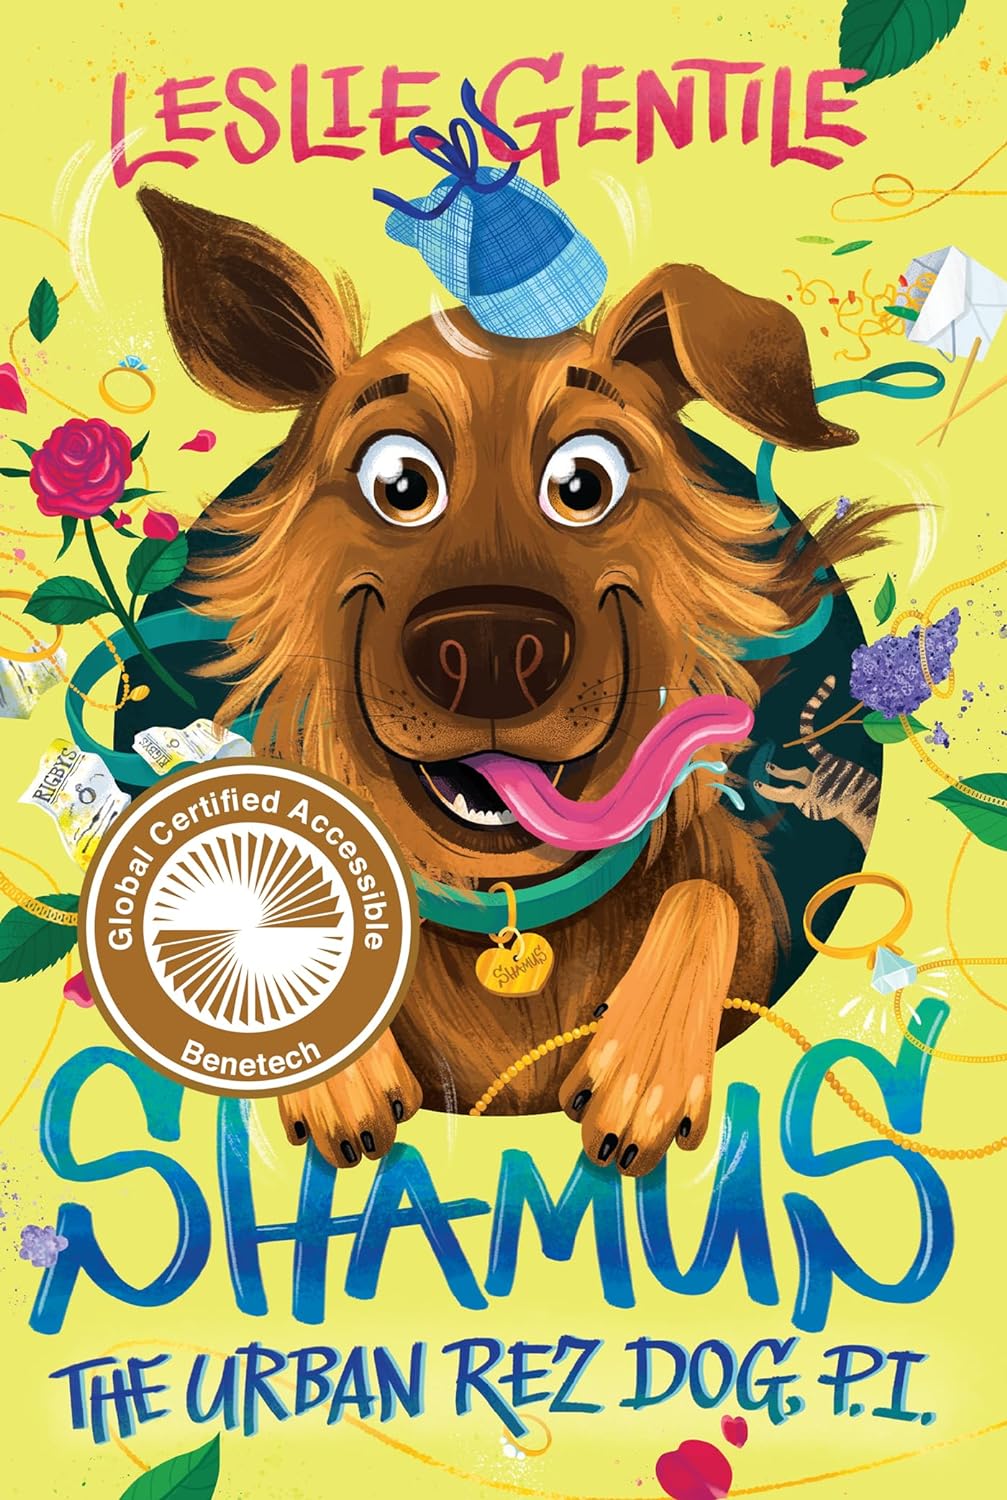 Shamus the Urban Rez Dog, P.I. by Leslie Gentile